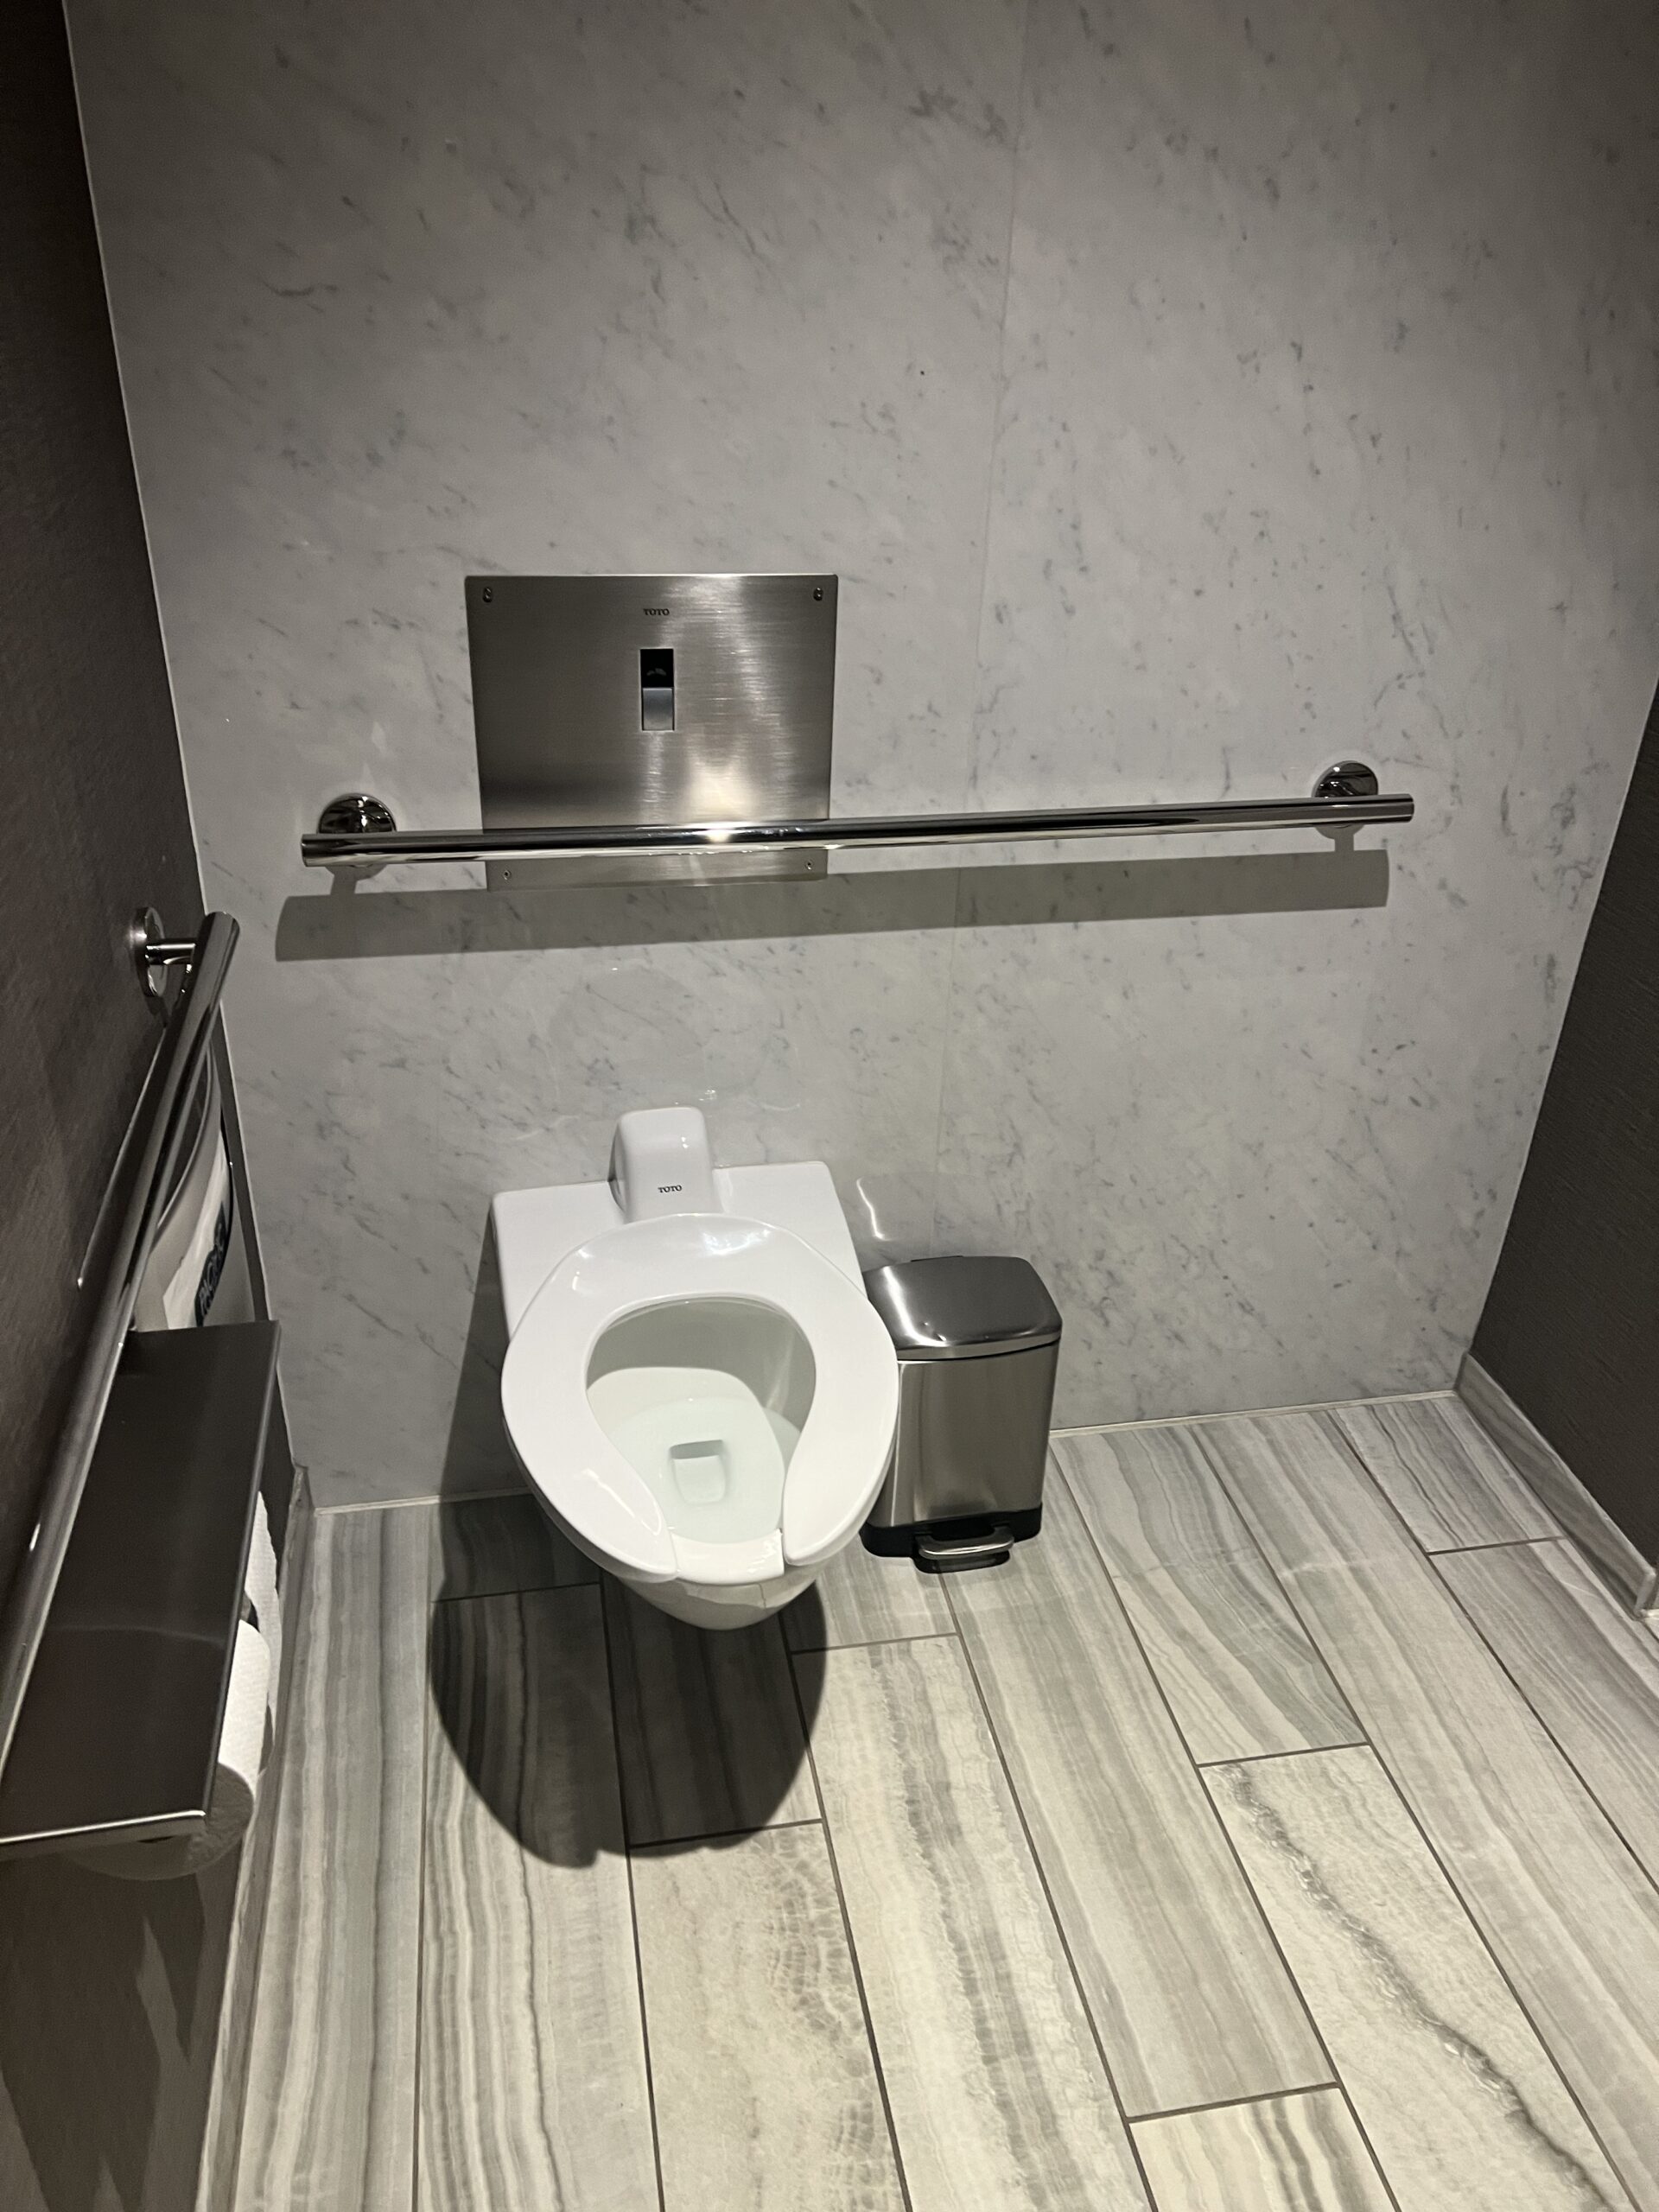 Sky Club LAX Toilet